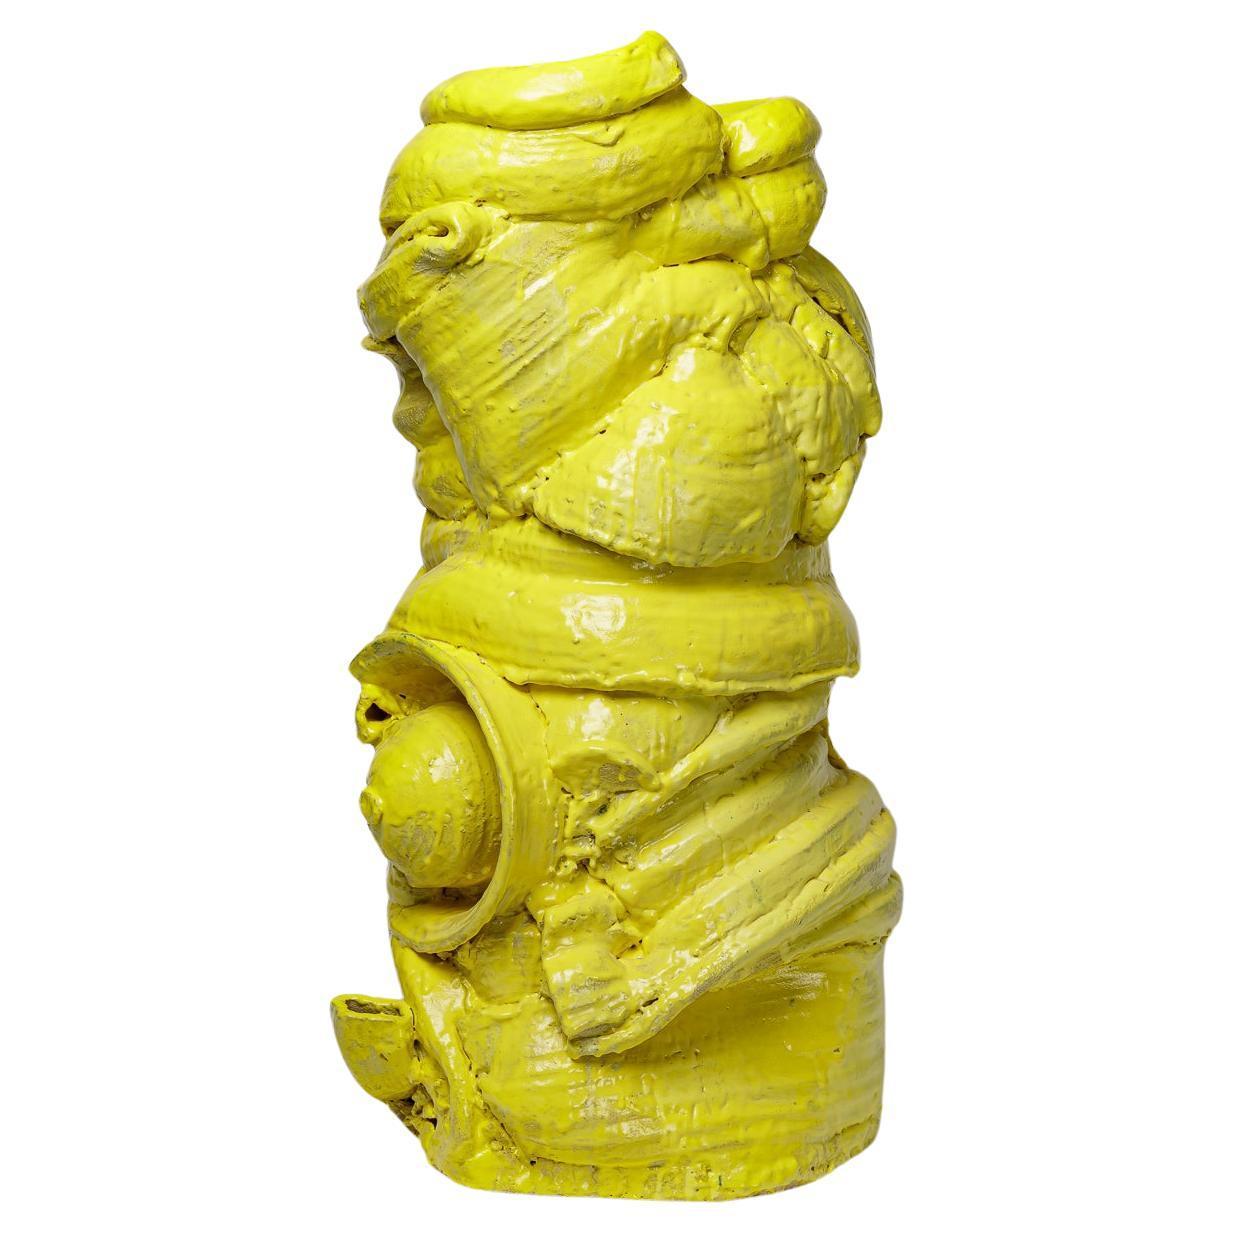 Large floor vase in yellow glazed ceramic by Patrick Crulis, 2023.